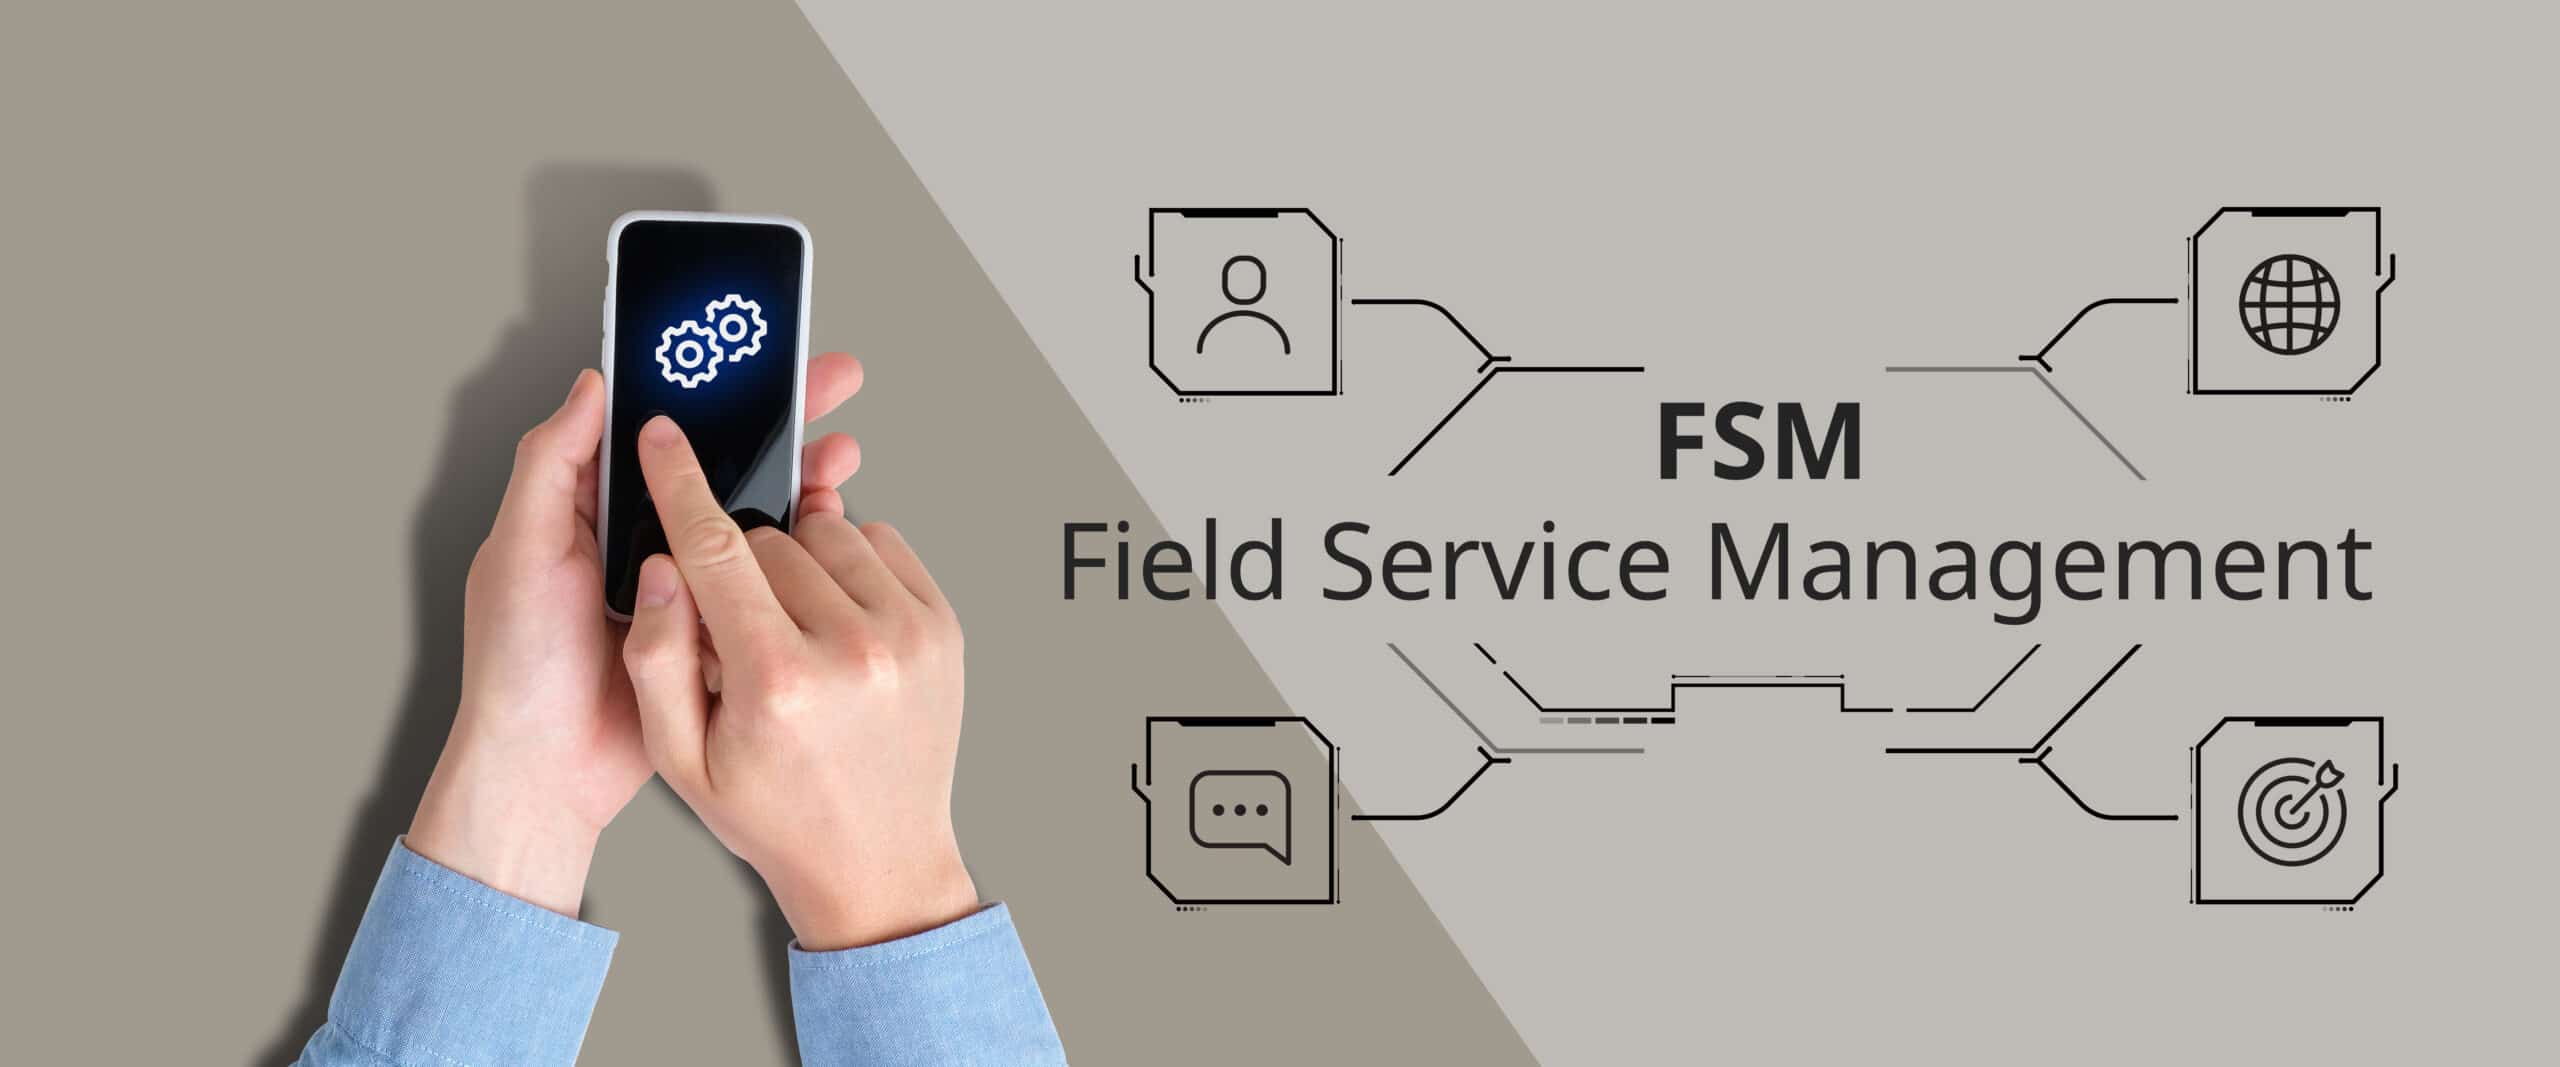 Field service management